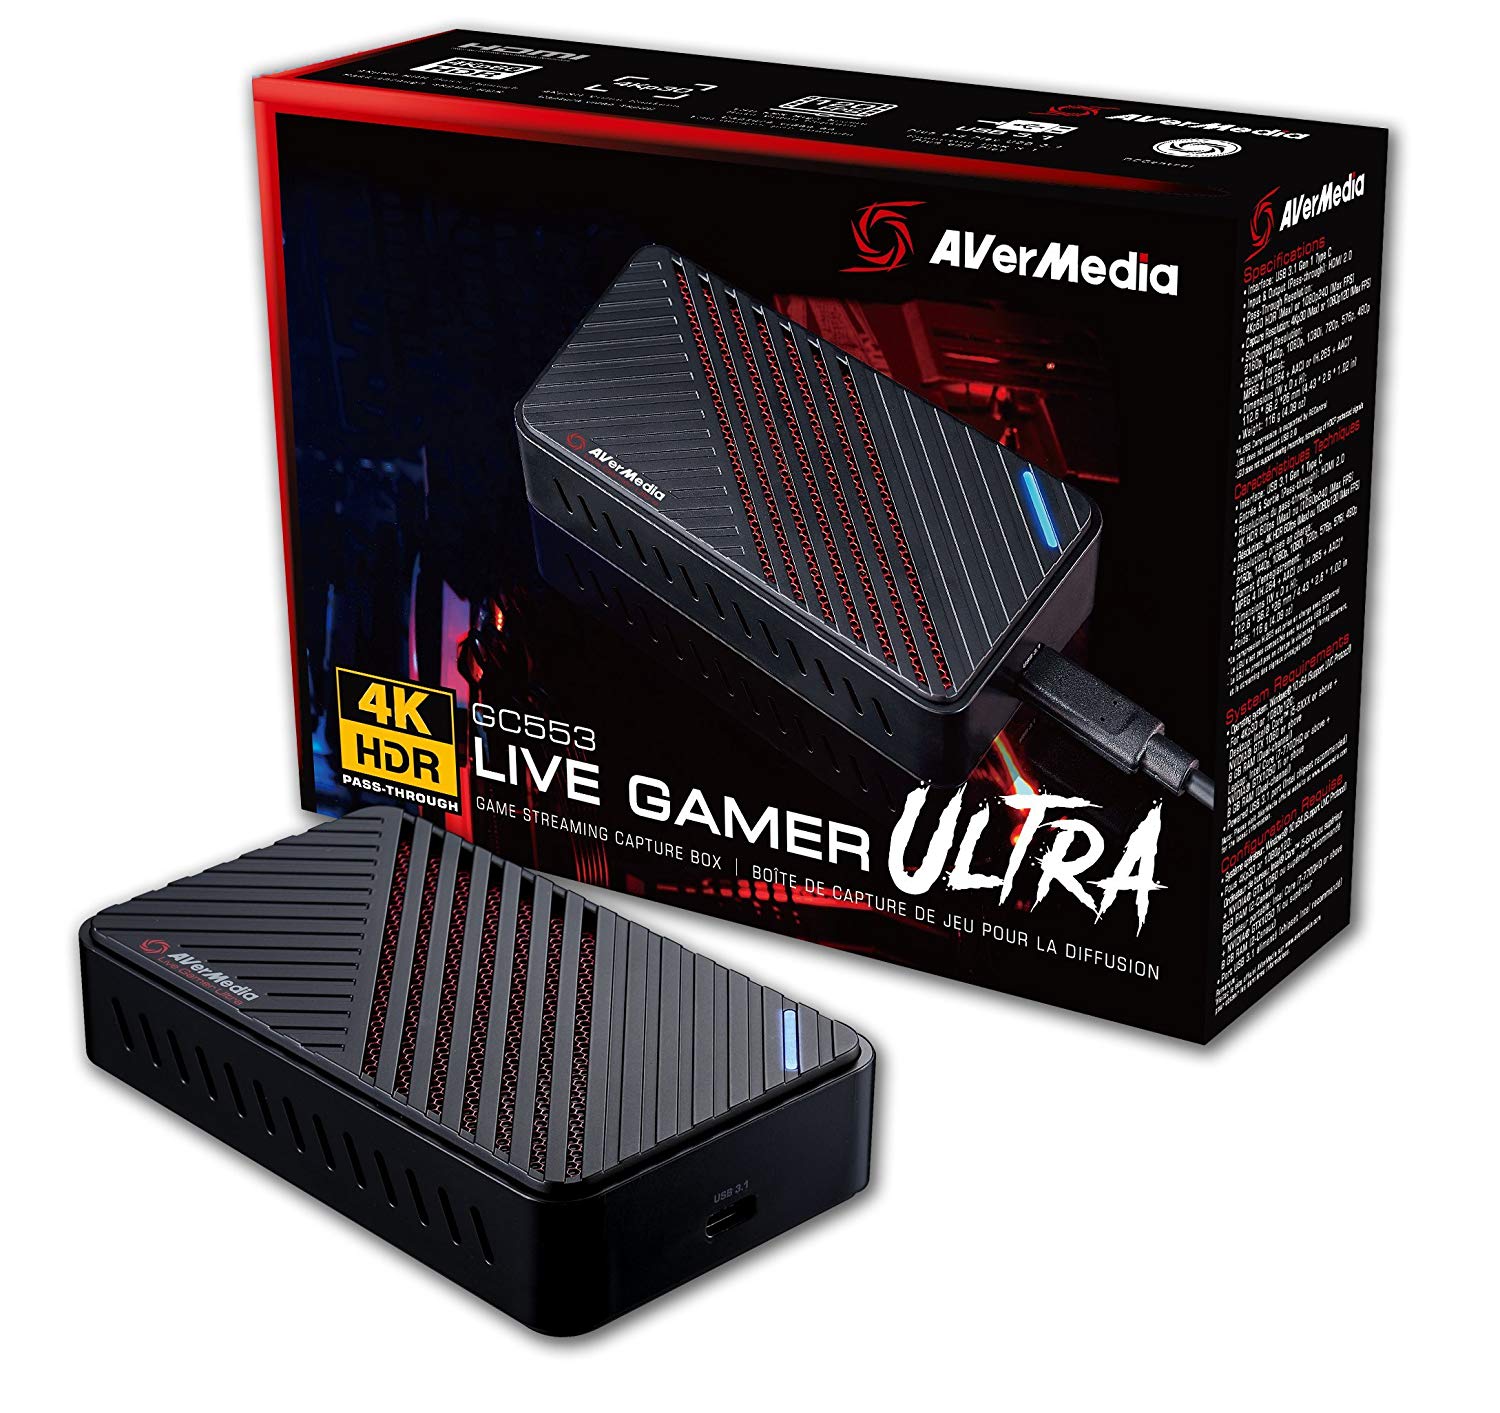 AVerMedia Live Gamer Ultra – 4Kp60 HDR Pass-Through, 4Kp30 Capture 